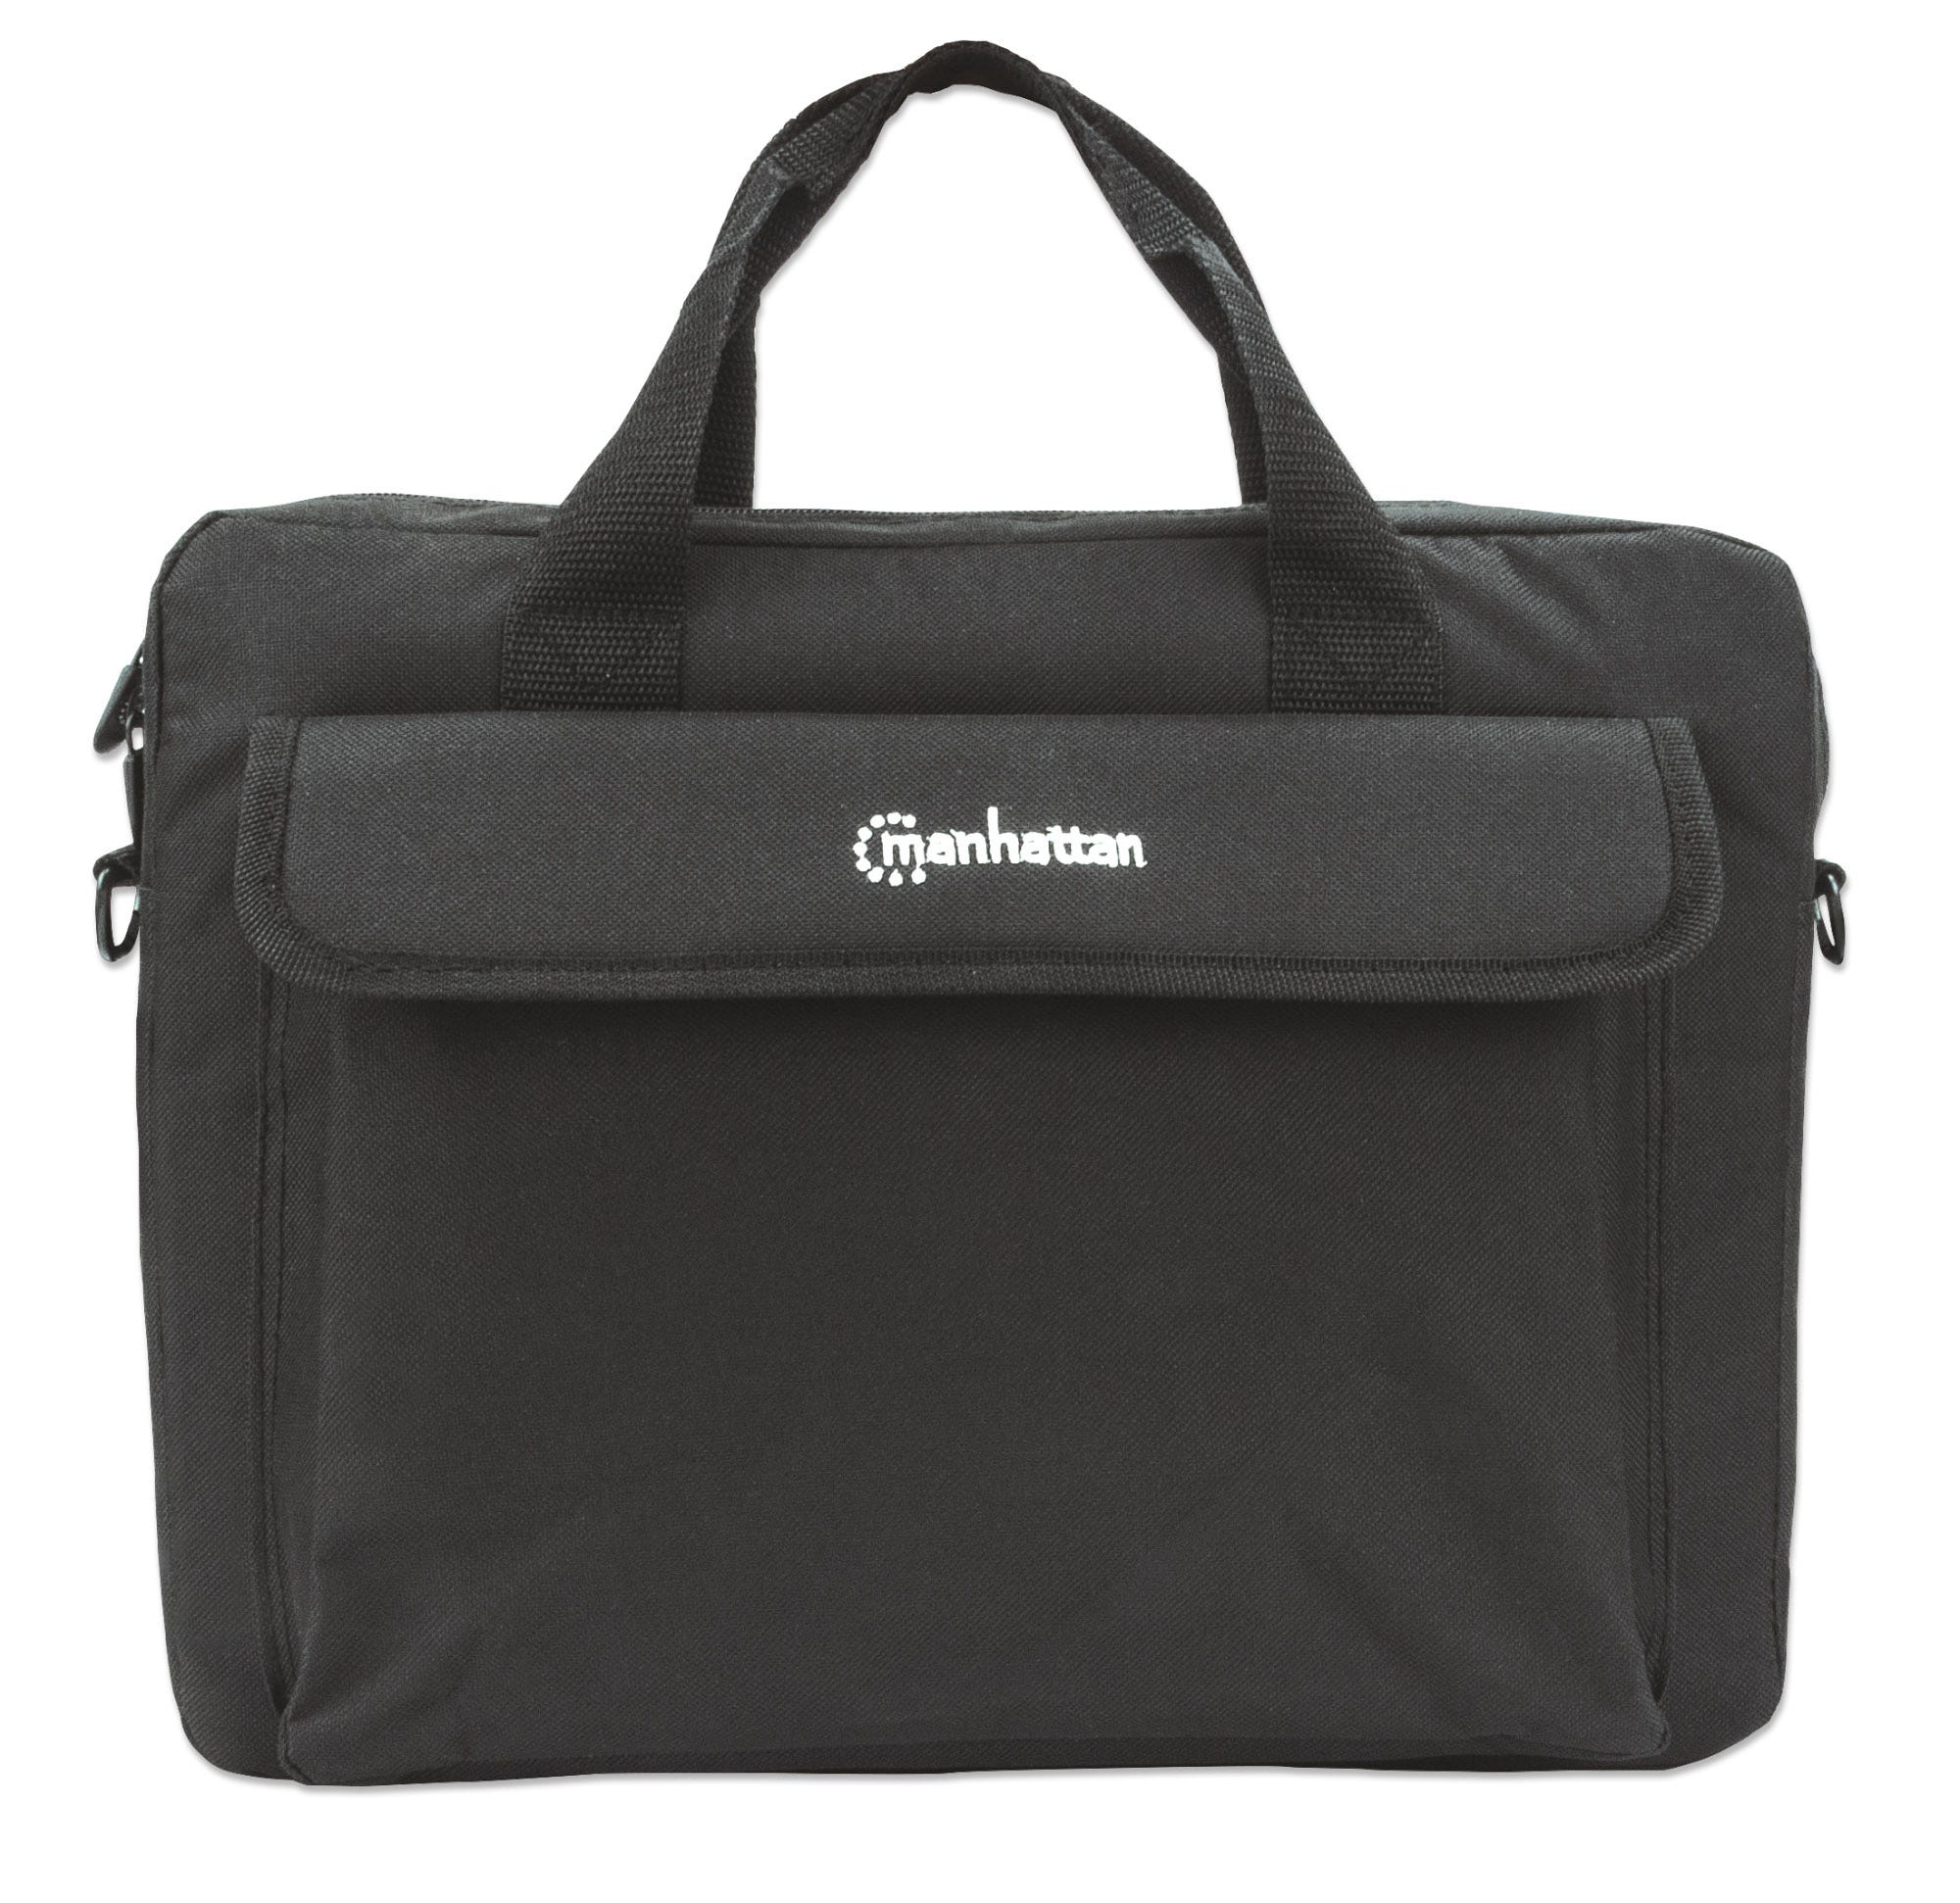 Manhattan London Laptop Bag 14.1", Top Loader, Accessories Pocket, Shoulder Strap (removable), Black, Three Year Warranty